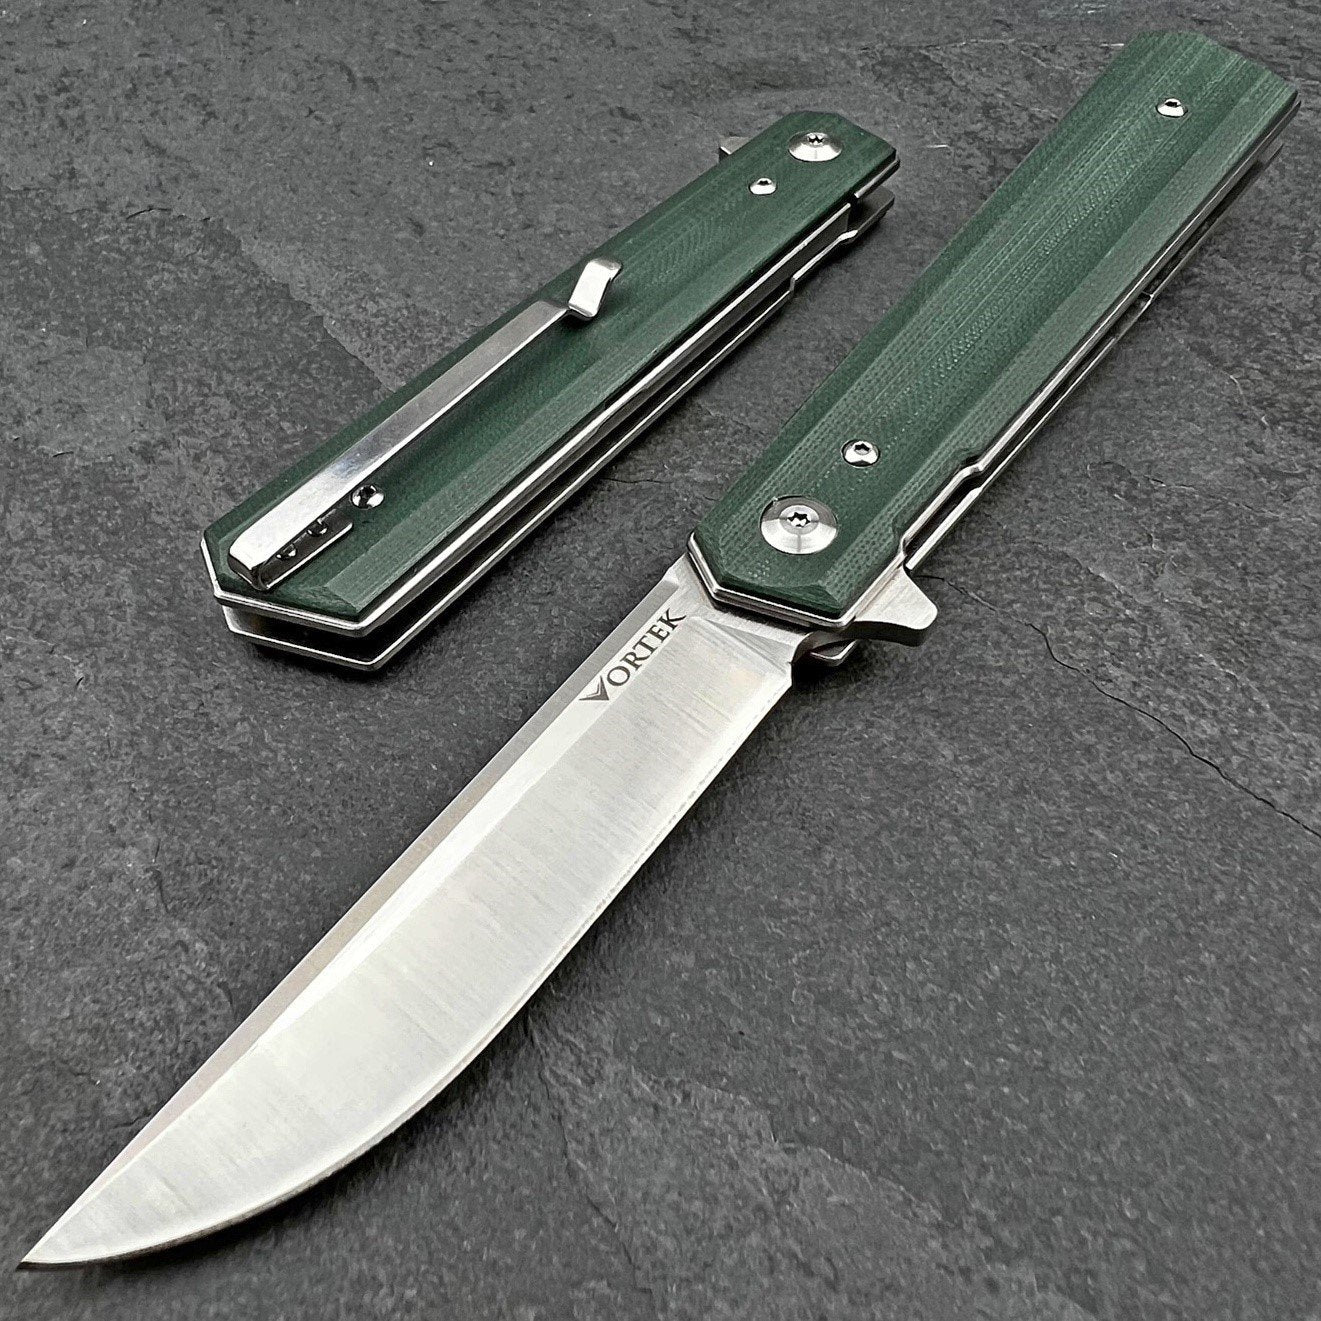 APACHE: Green G10 Handles, 9Cr18MoV Blade